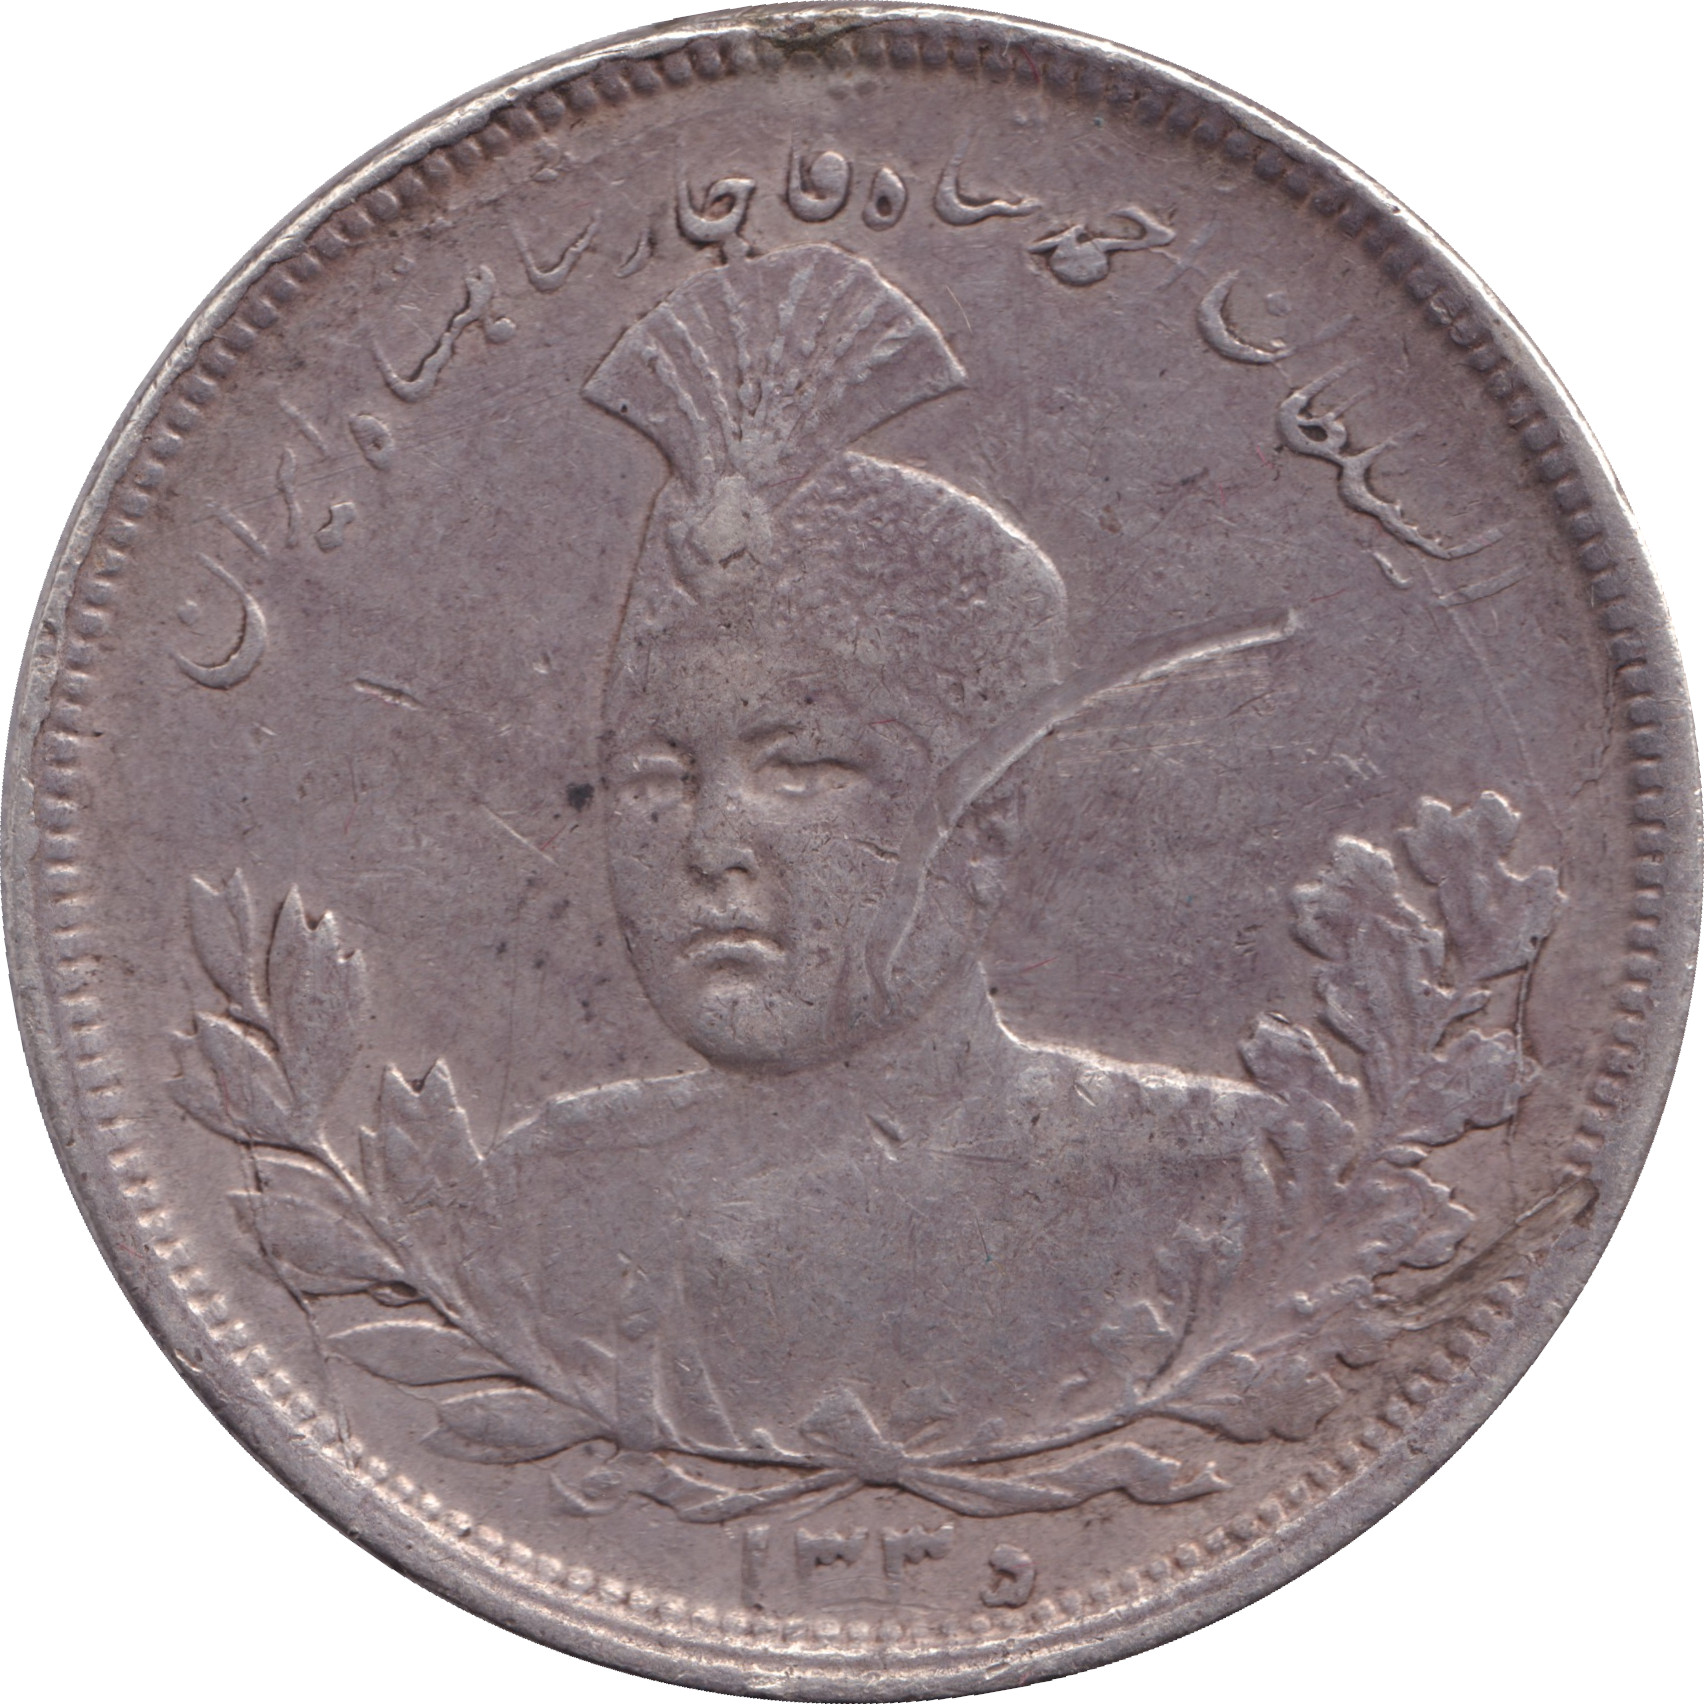 5000 dinars - Sultan Ahmad Shah - Argent - Buste